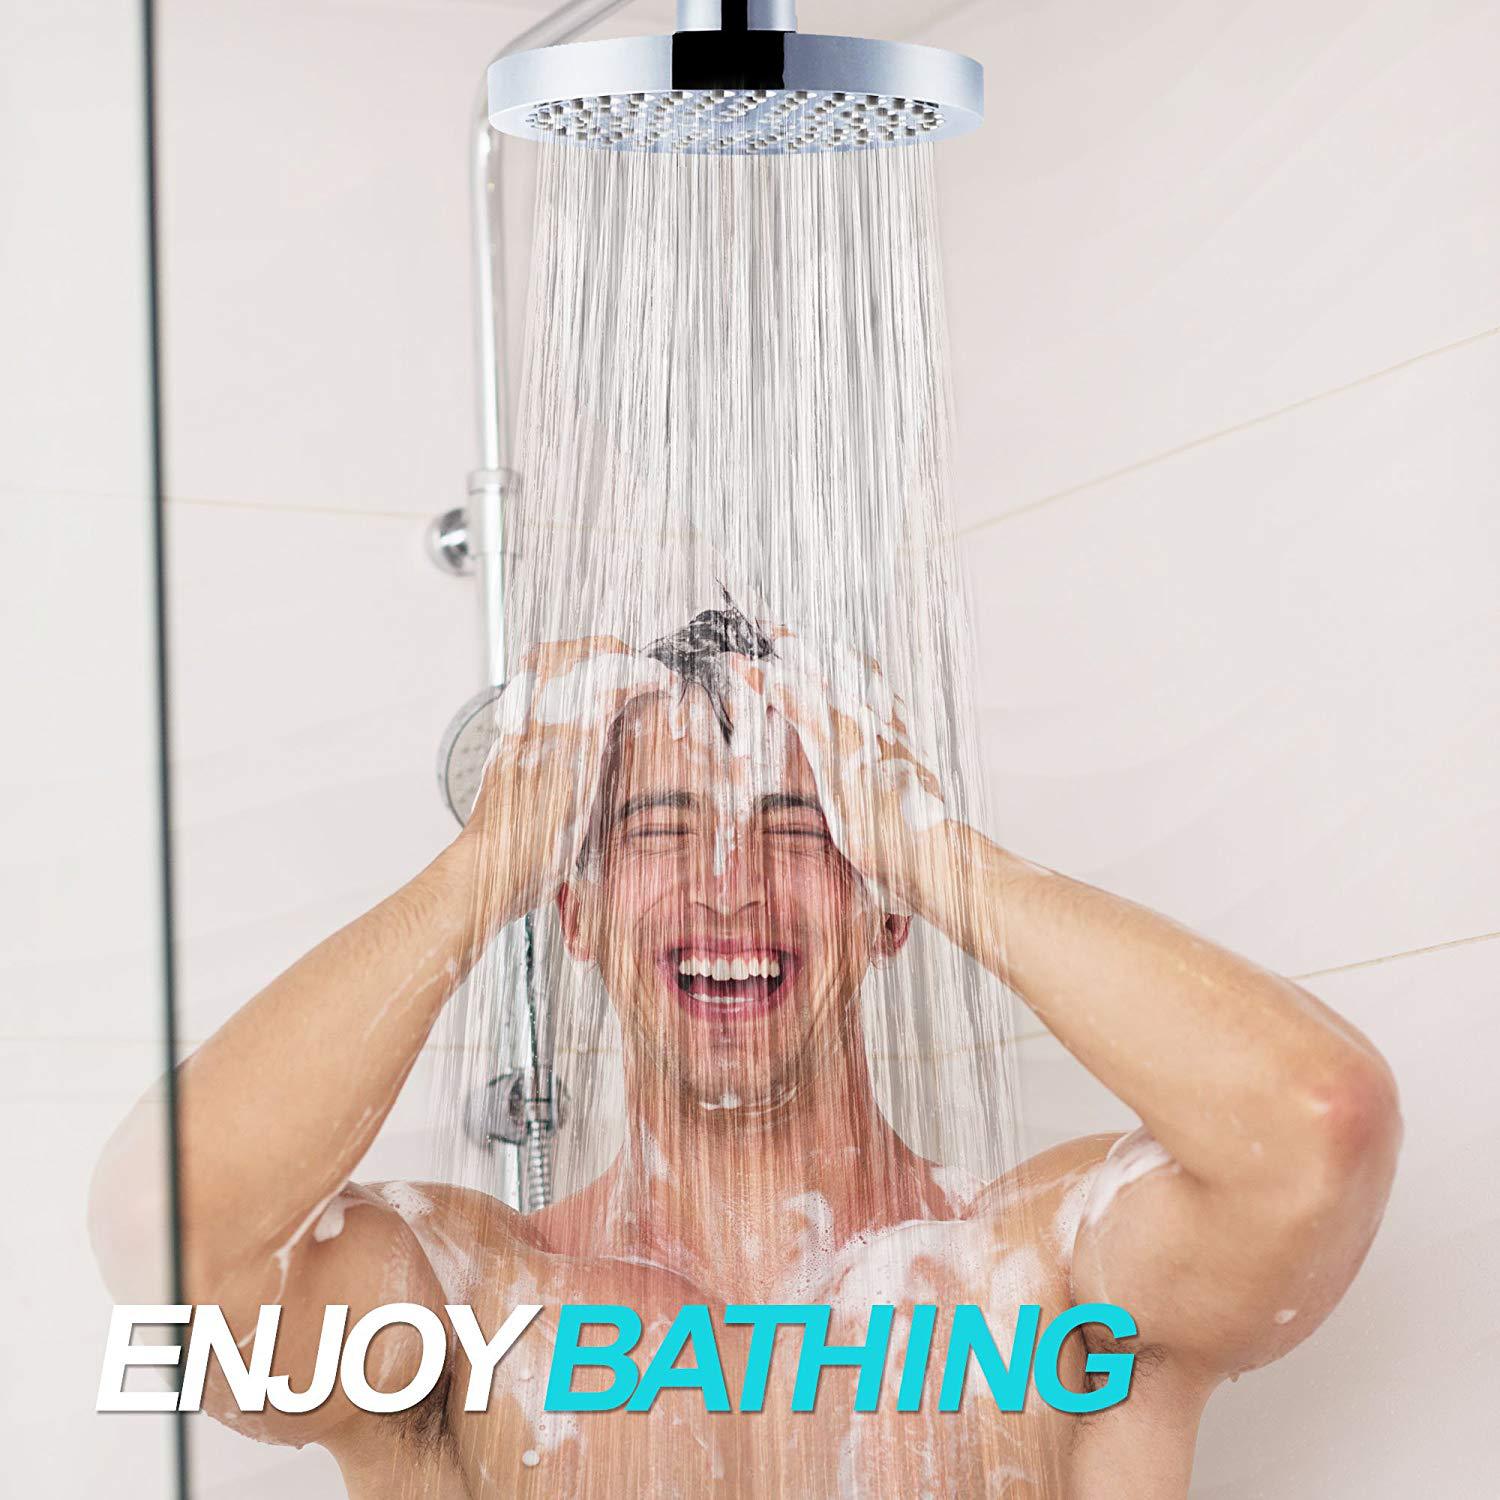 High Pressure Rain Luxury Modern Chrome Look Bathroom Shower Head Replacement 